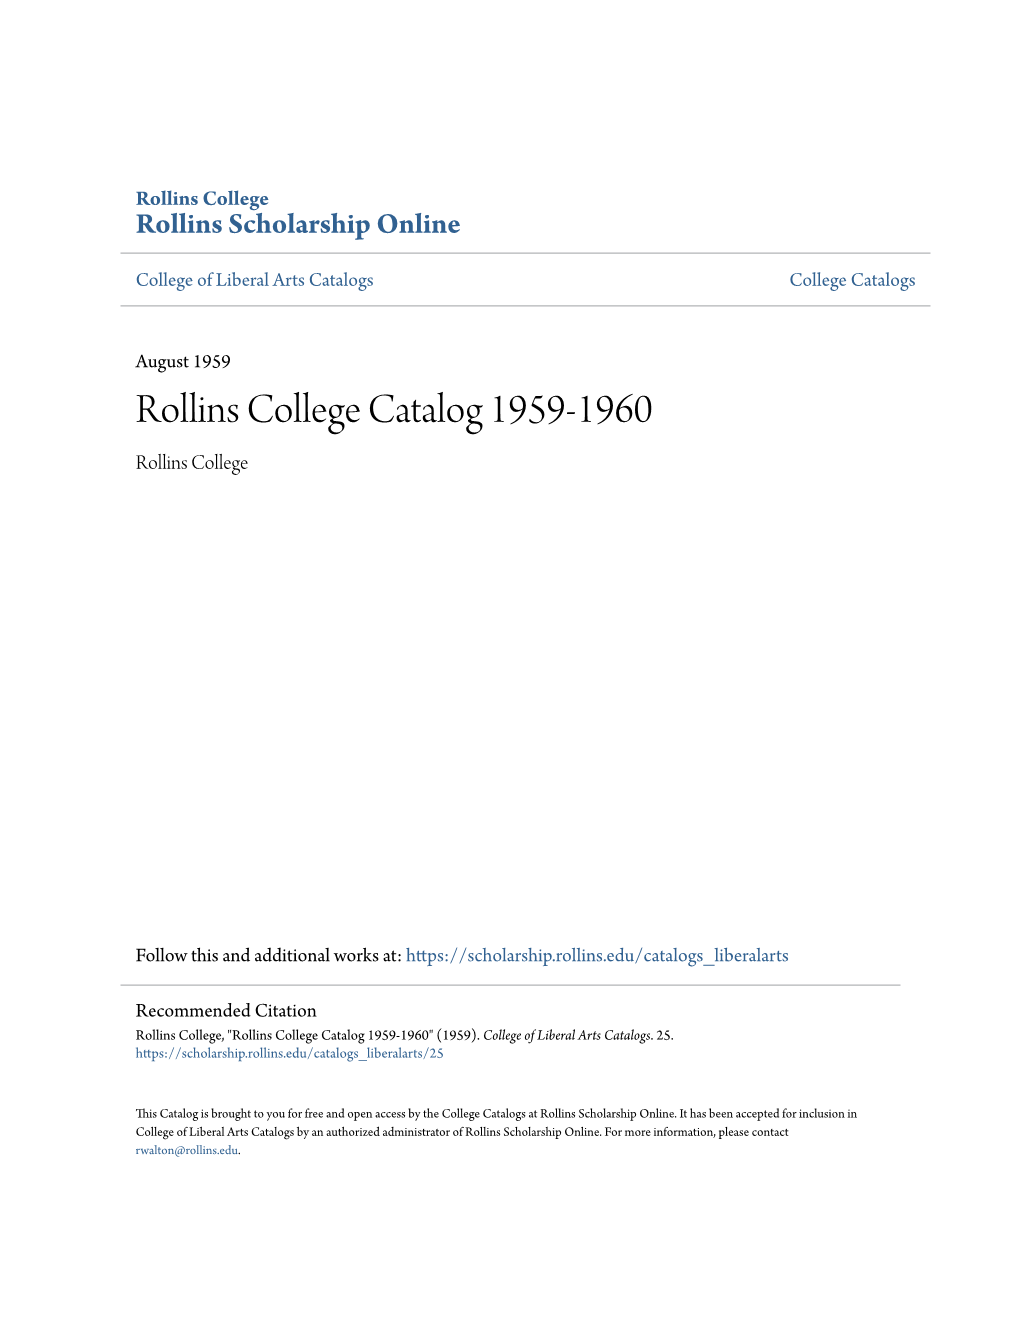 Rollins College Catalog 1959-1960 Rollins College